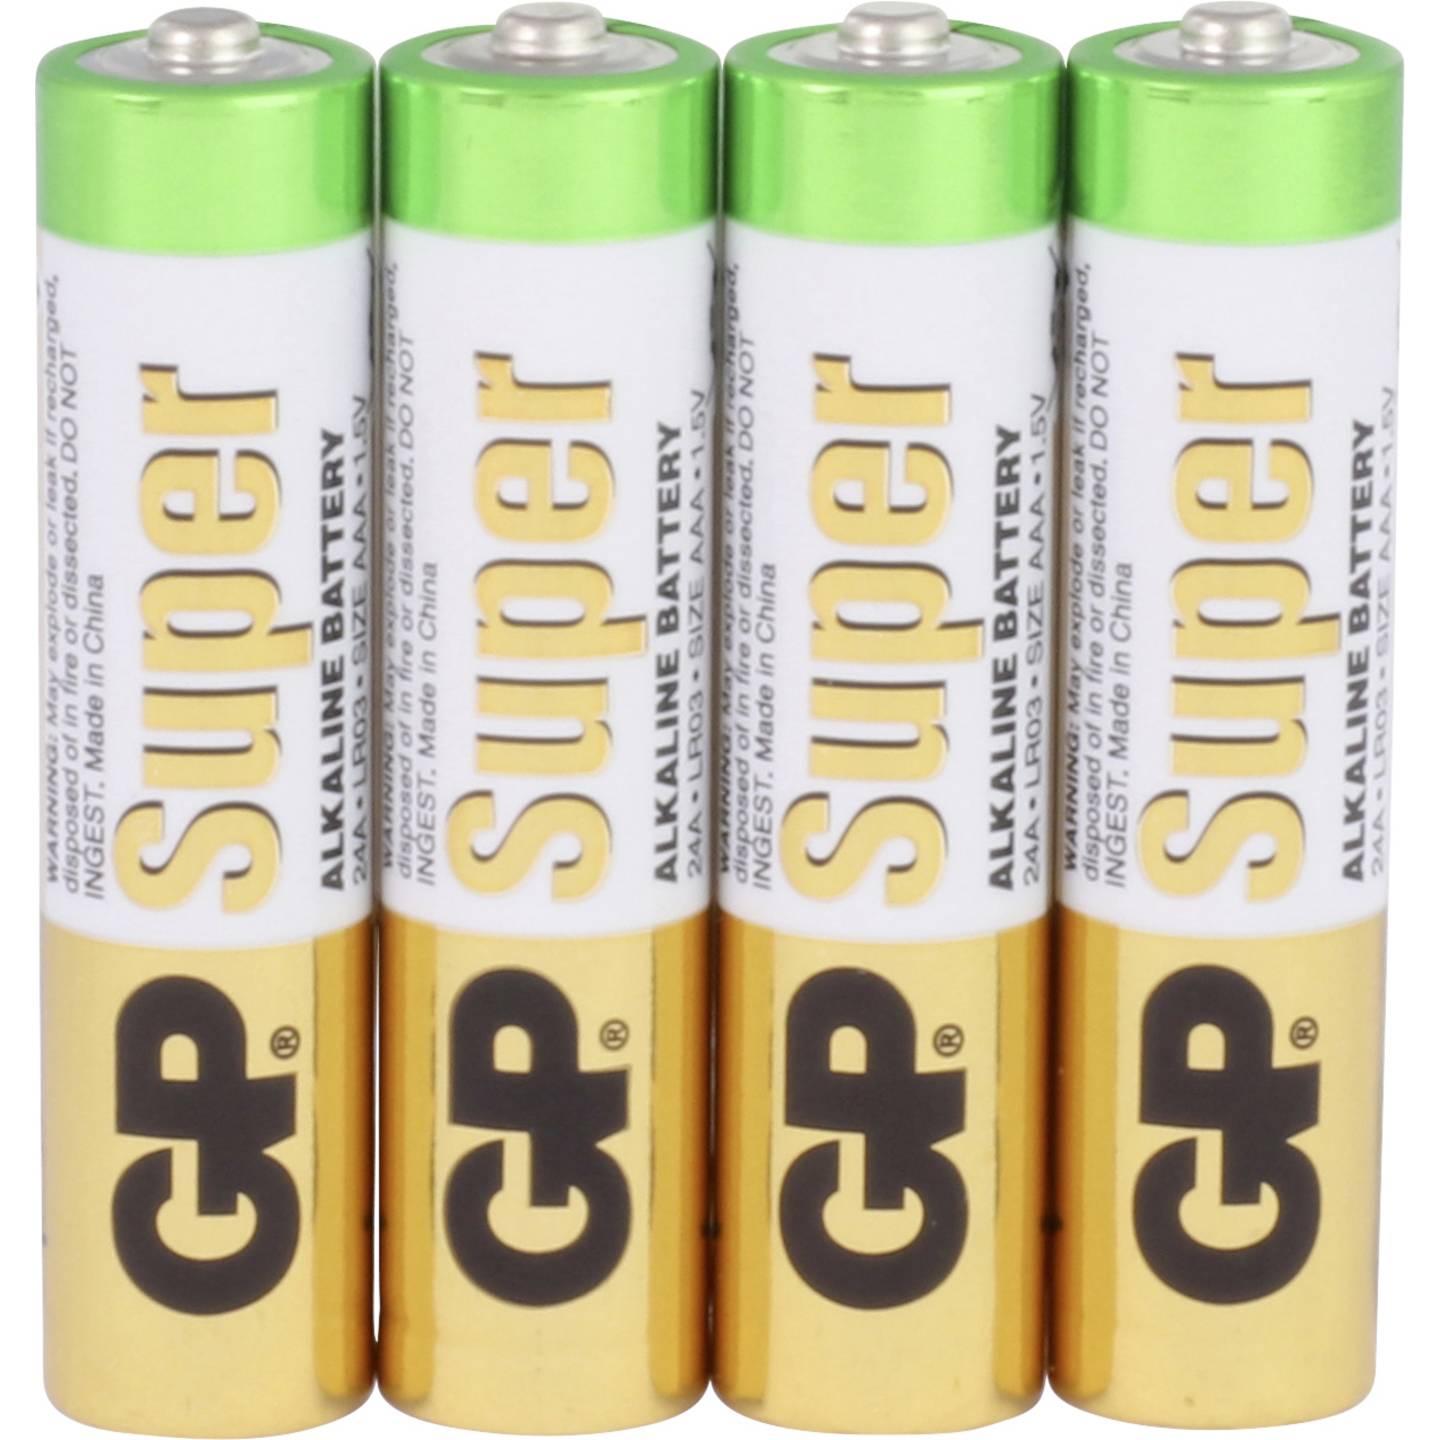 Batterie / Pile GP Super Alkaline AAA